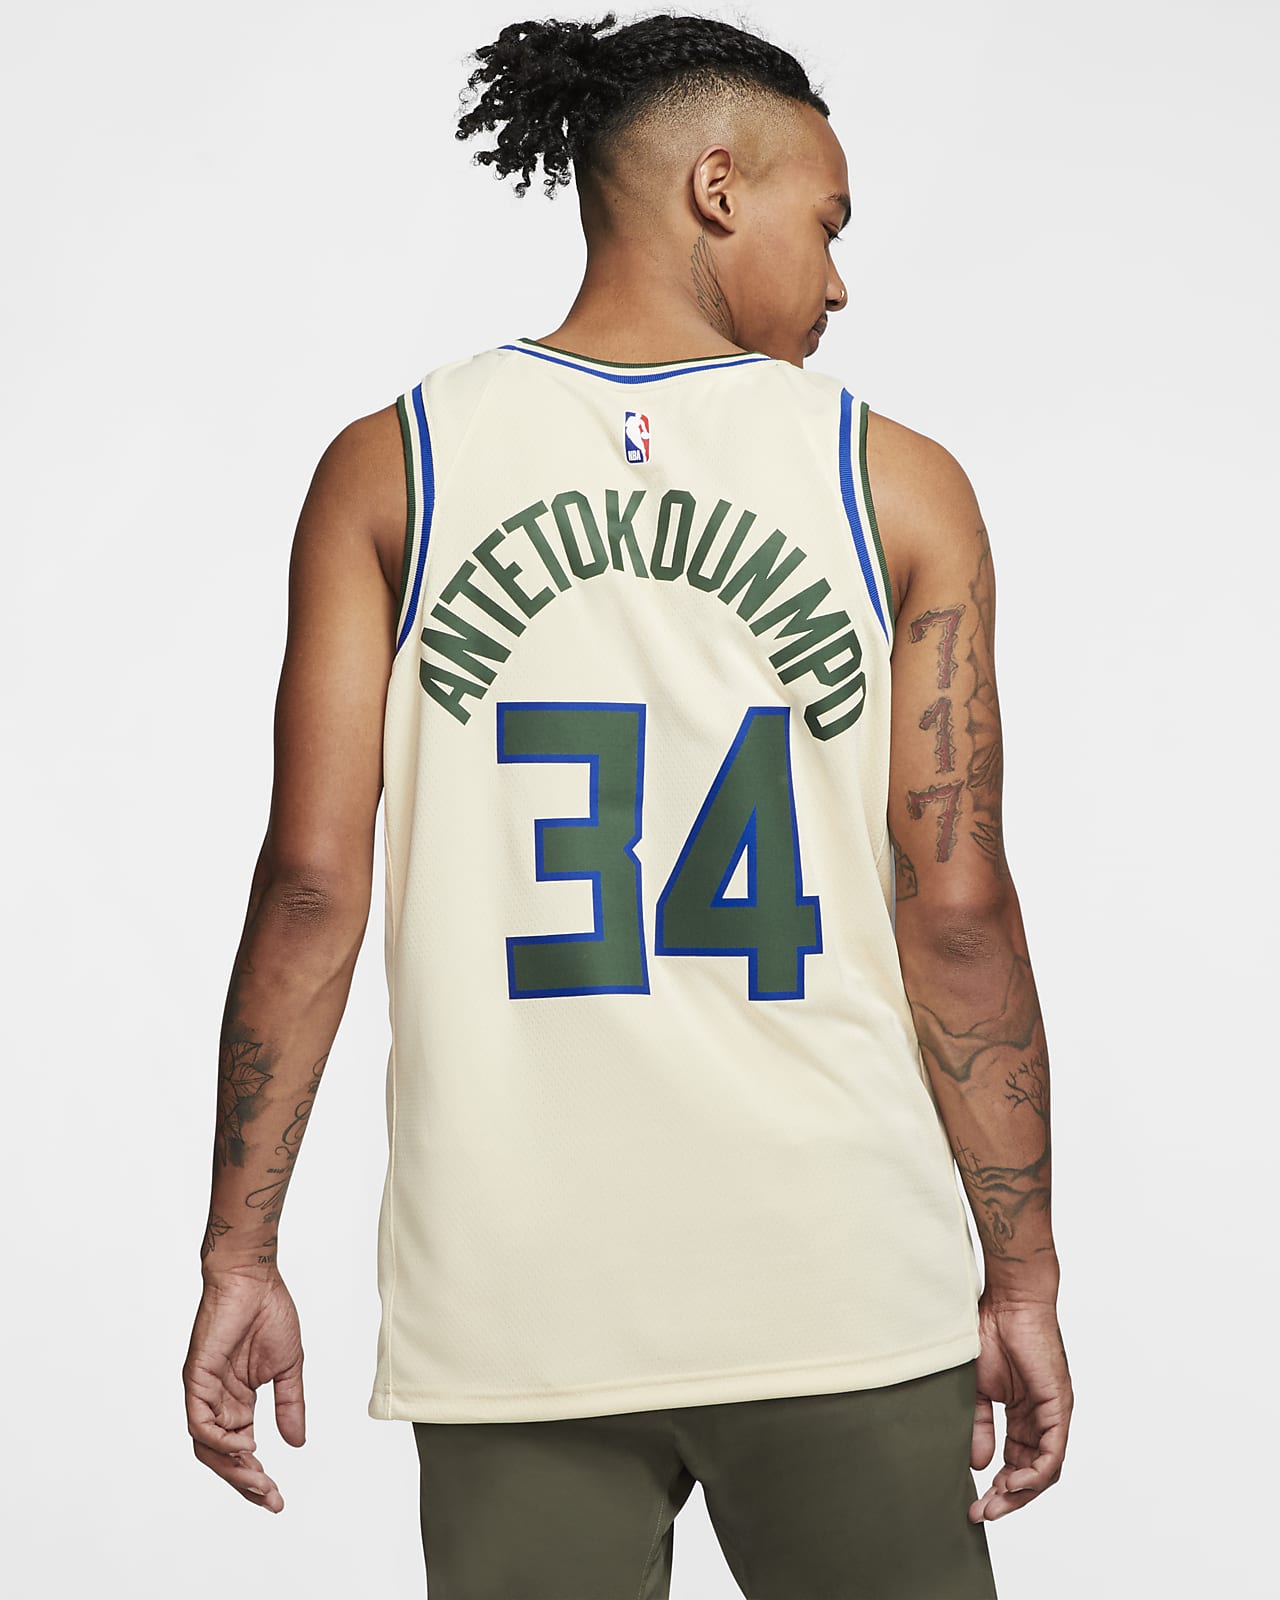 密尔沃基雄鹿队 (Giannis Antetokounmpo) – City Edition Nike NBA Swingman Jersey 男子球衣